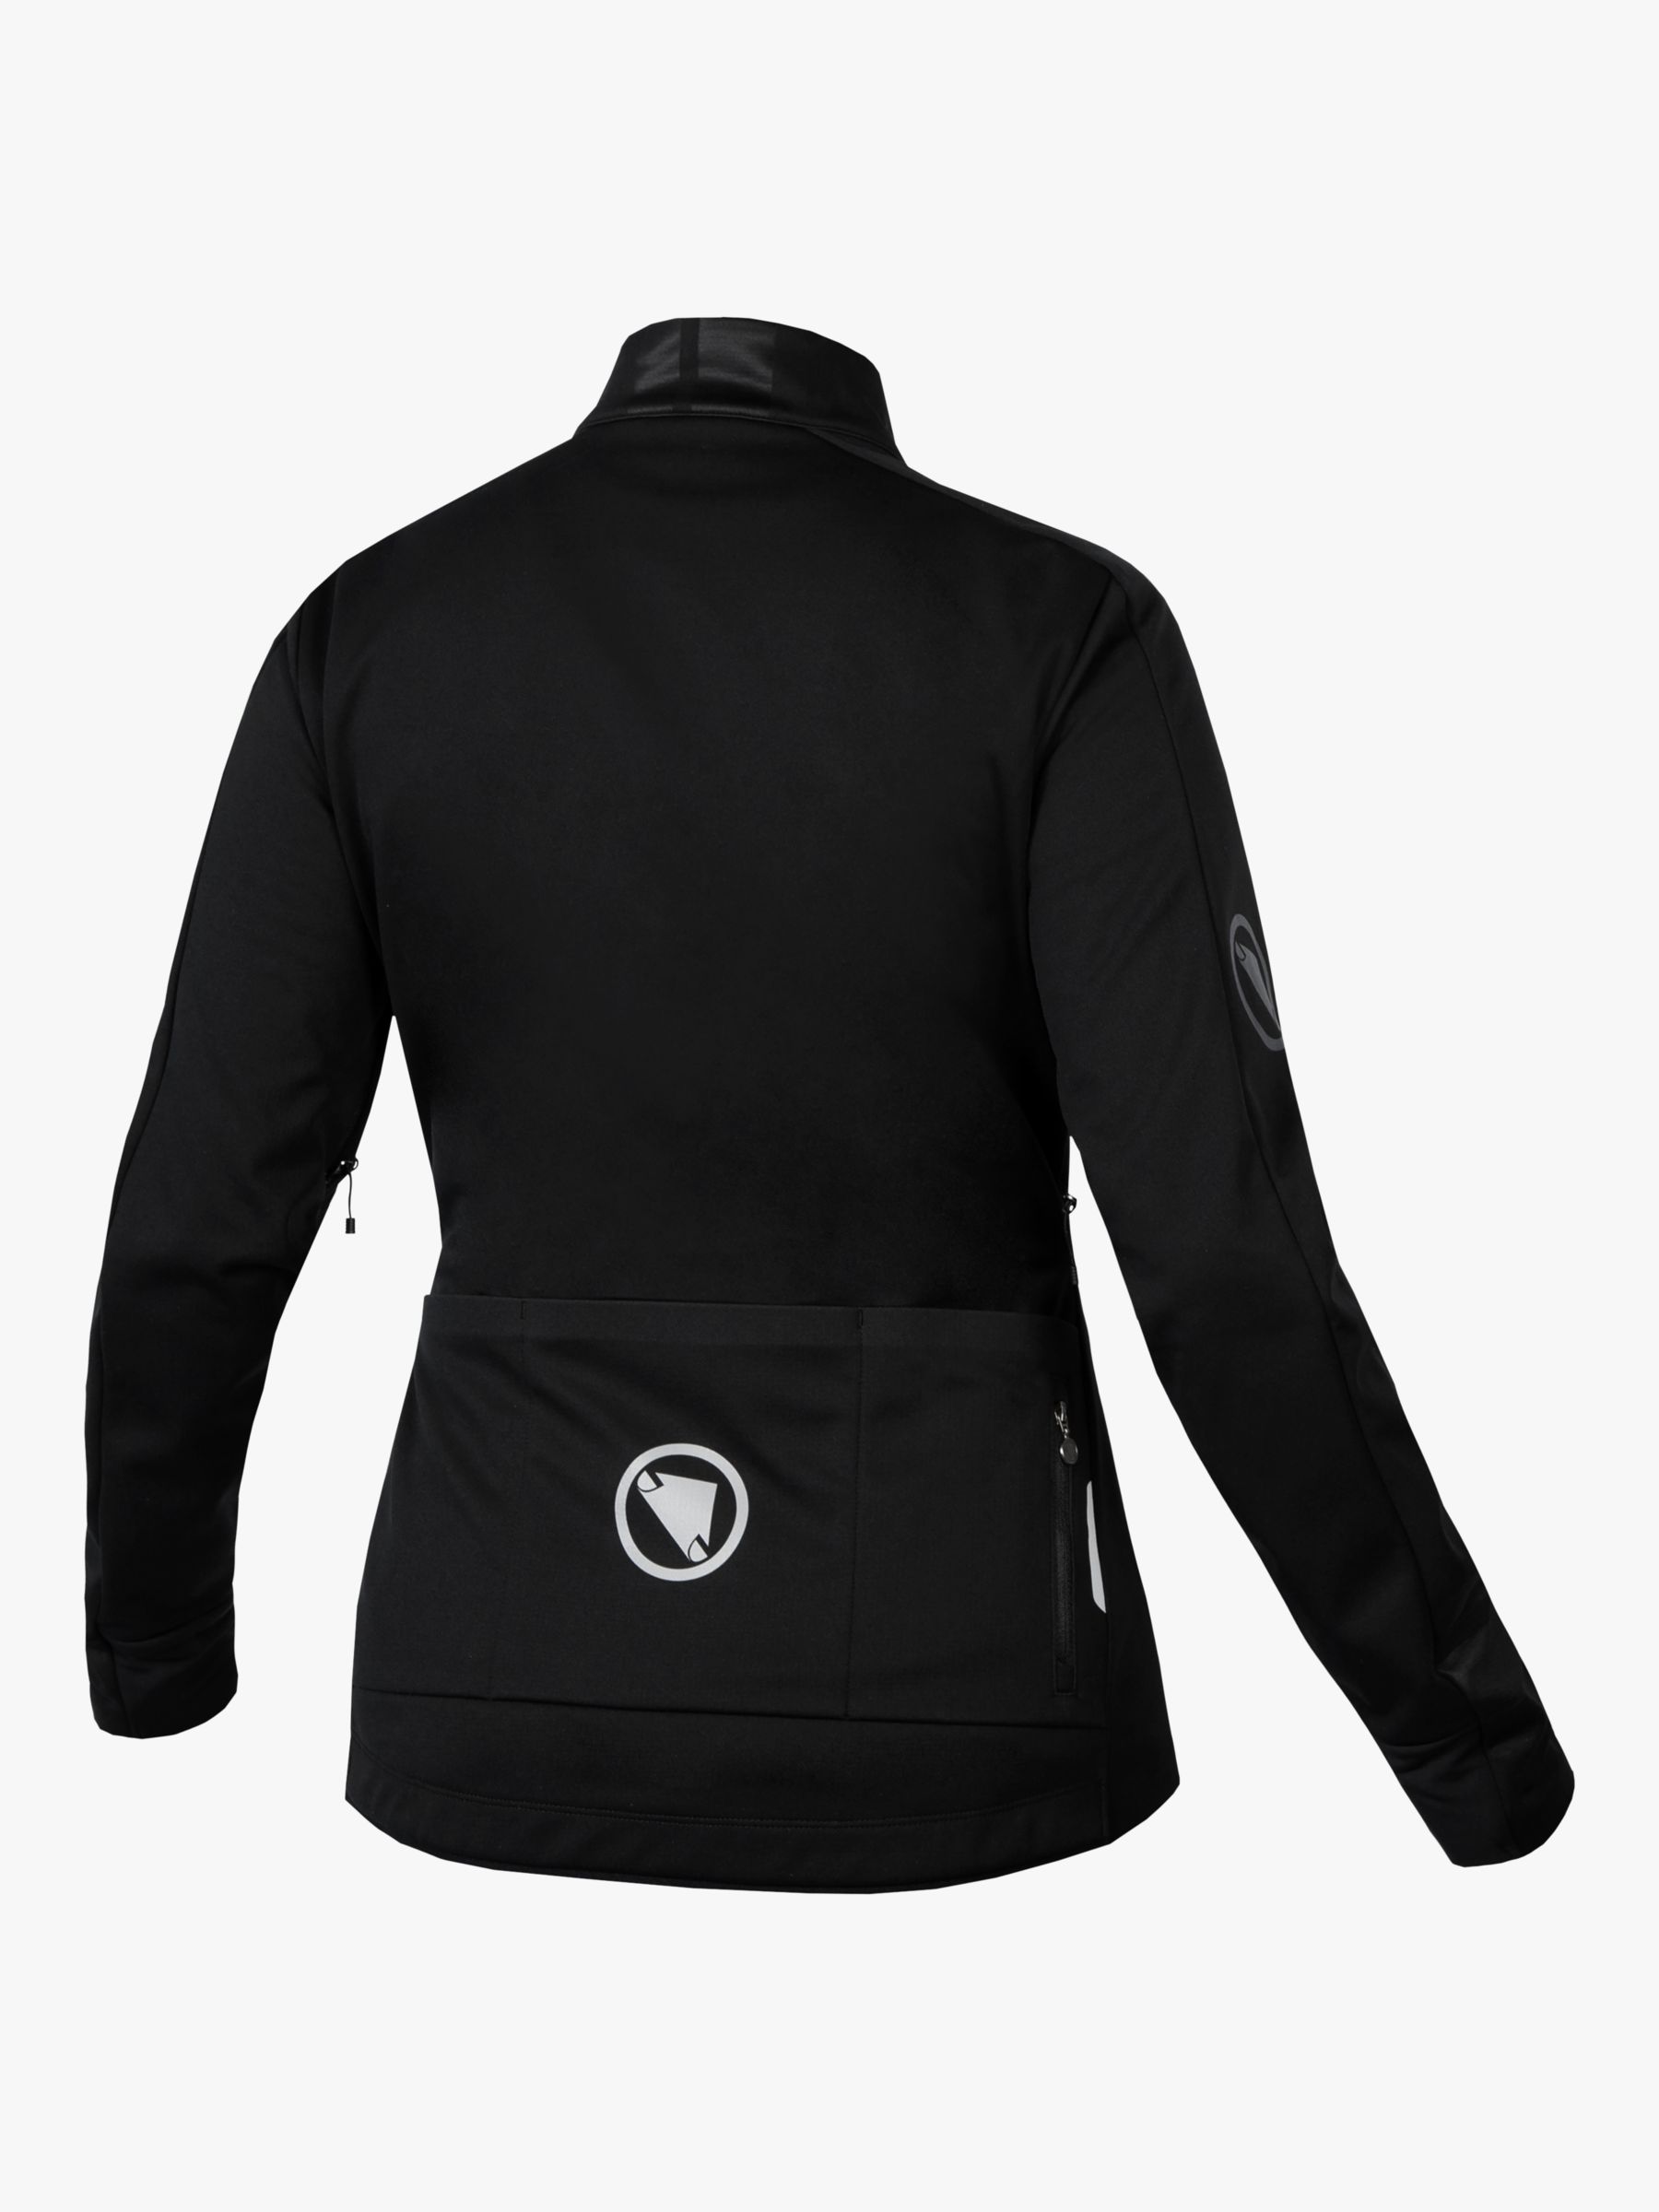 Endura Women's Windchill Sports Jacket, Black, XS